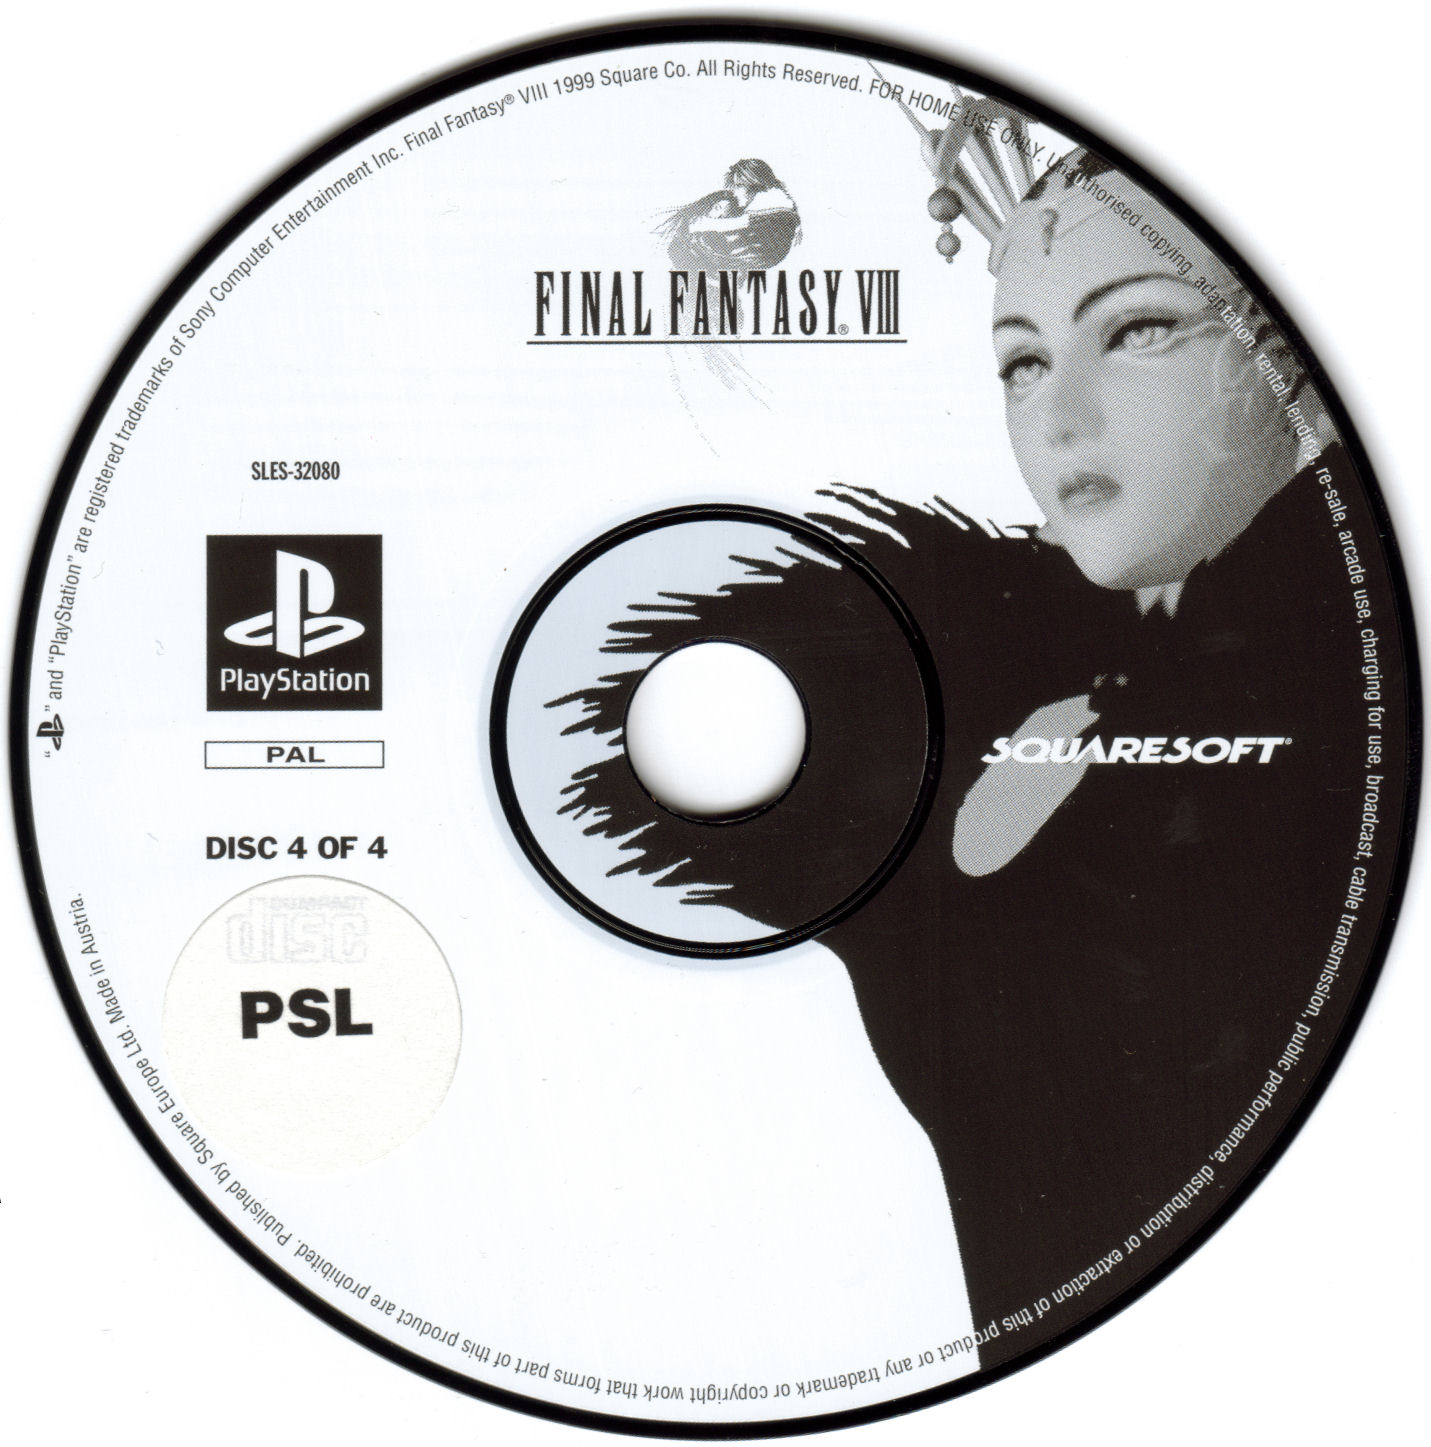 Диска final fantasy. PLAYSTATION 1 Final Fantasy диск. Final Fantasy 6 диск для ps1. Final Fantasy 7 ps1 обложка диска. Final Fantasy 8 диск.